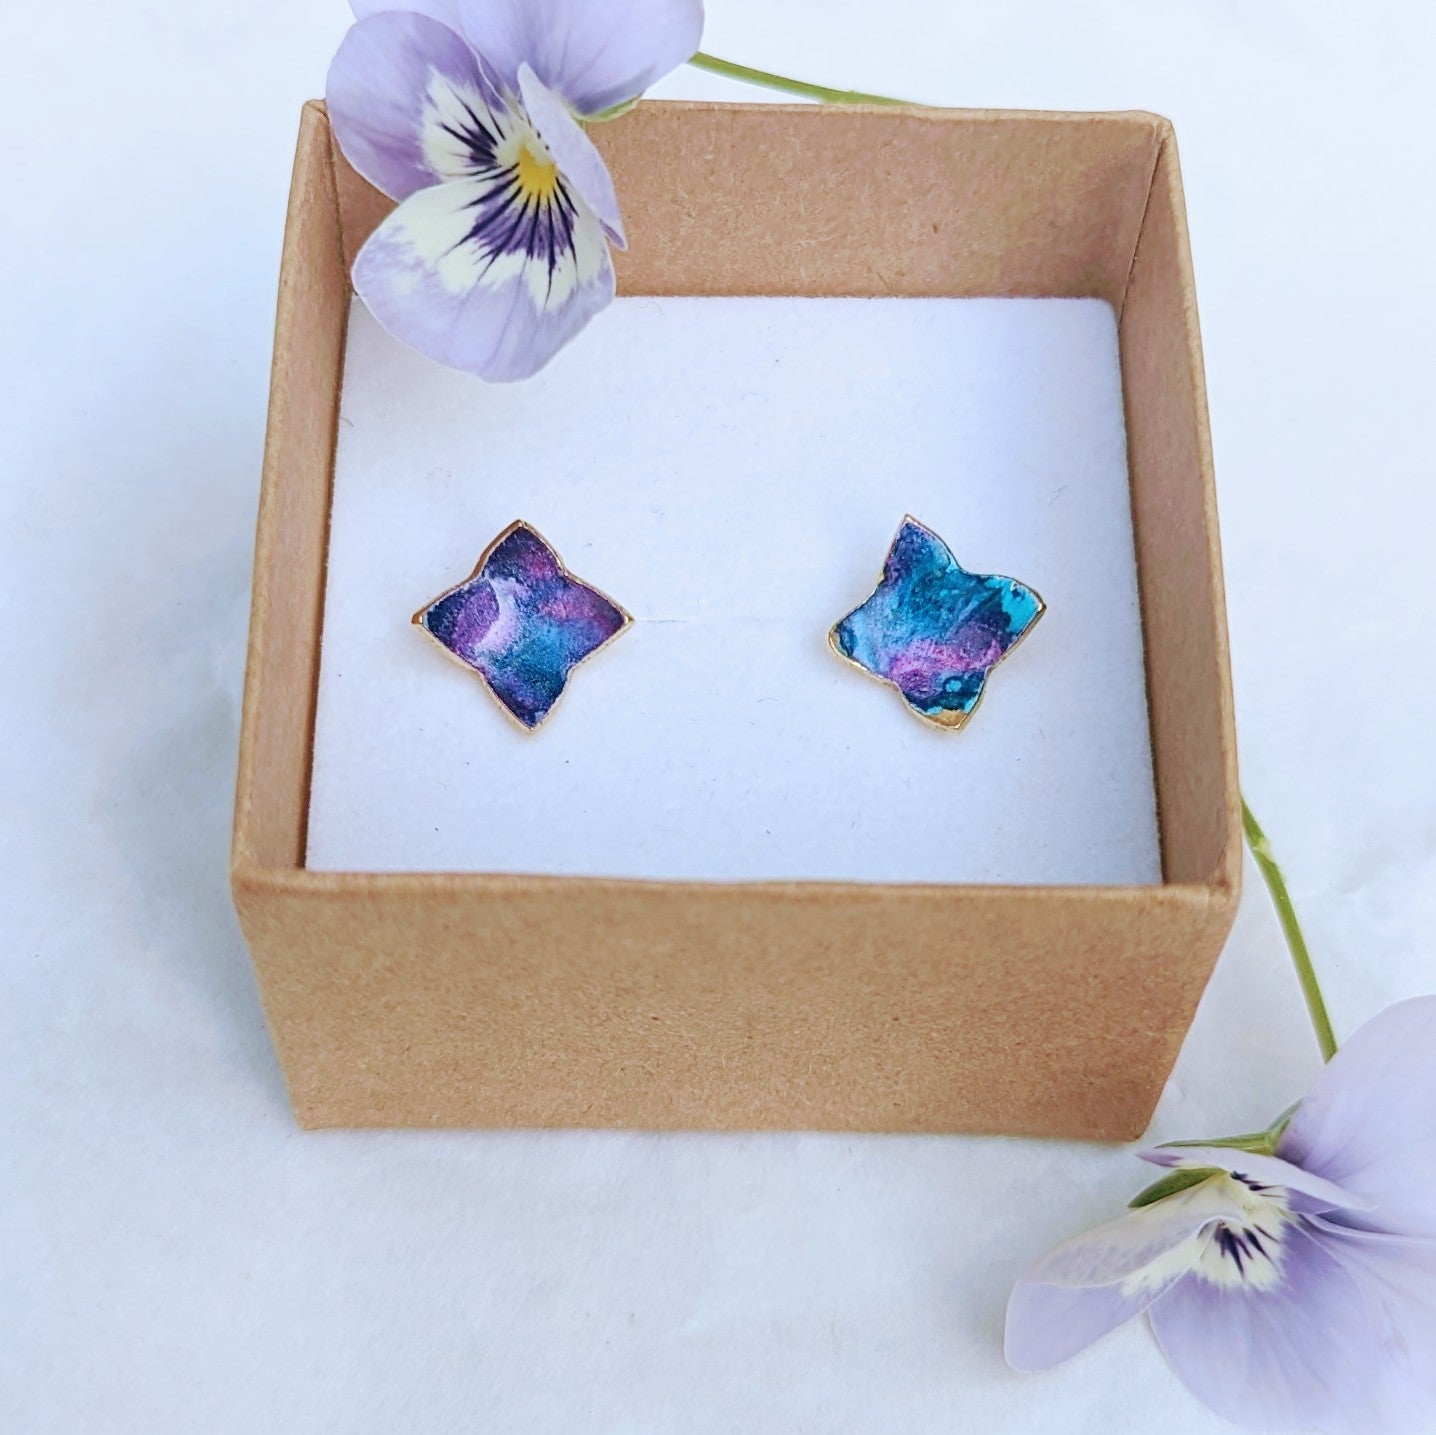 'Theia's Garden' Blue Star Floral Stud Earrings. Earrings displayed in Jewellery box